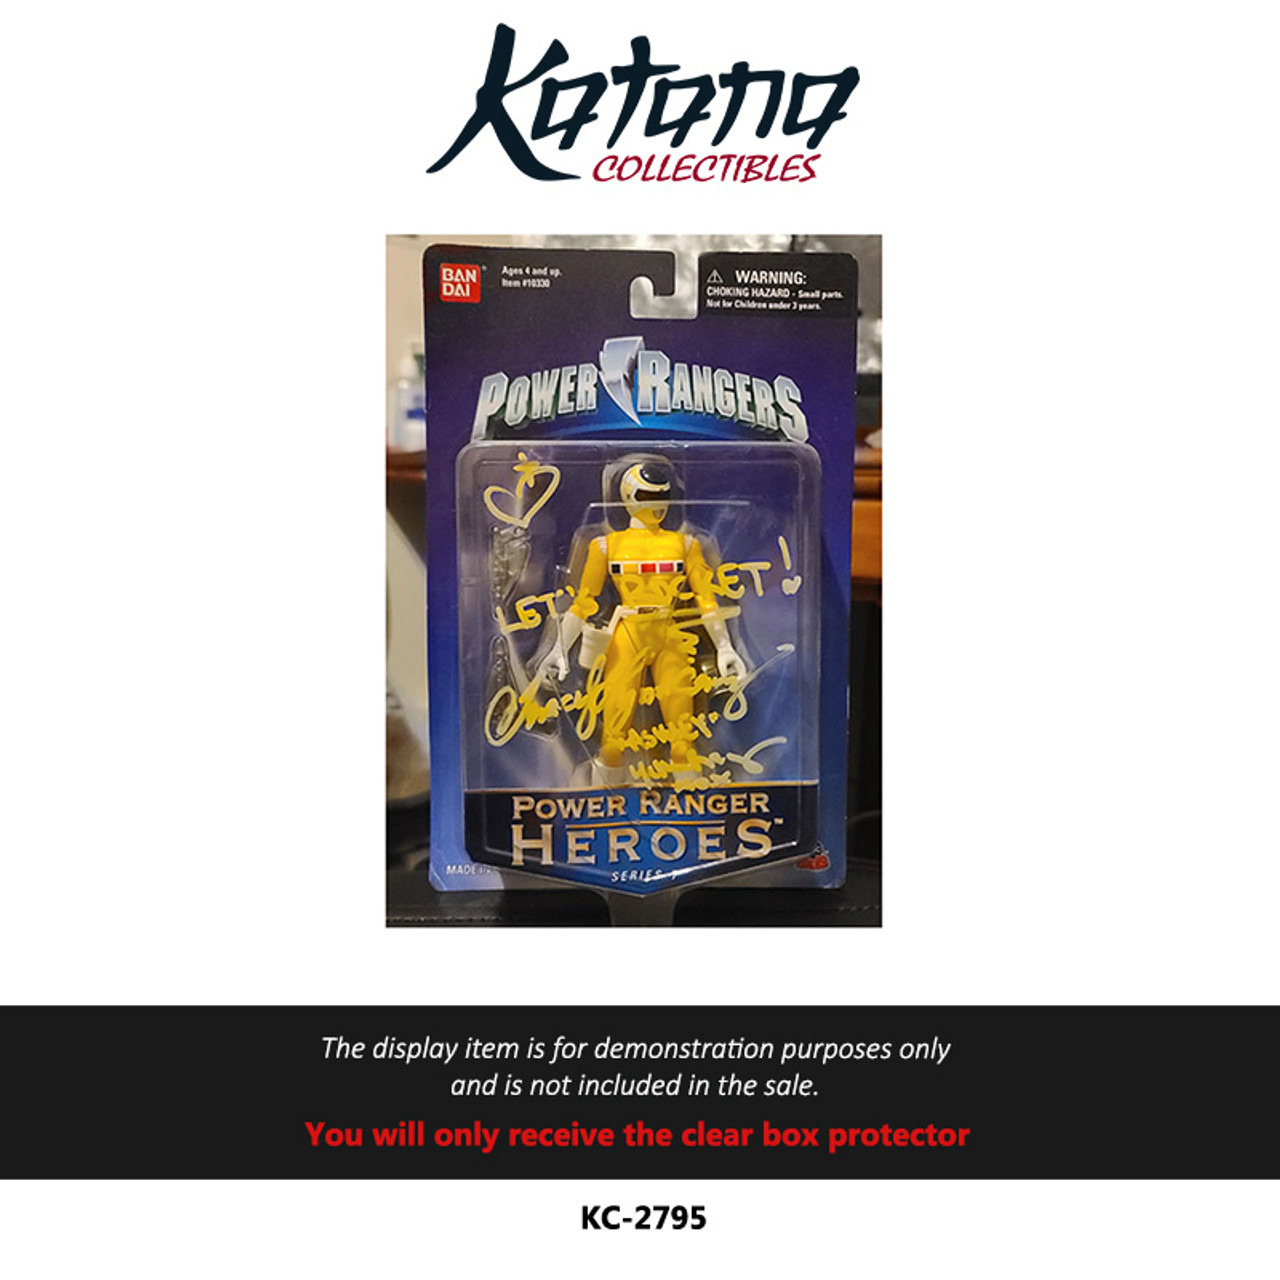 Katana Collectibles Protector For Power Ranger Heroes Yellow Space Ranger Figure